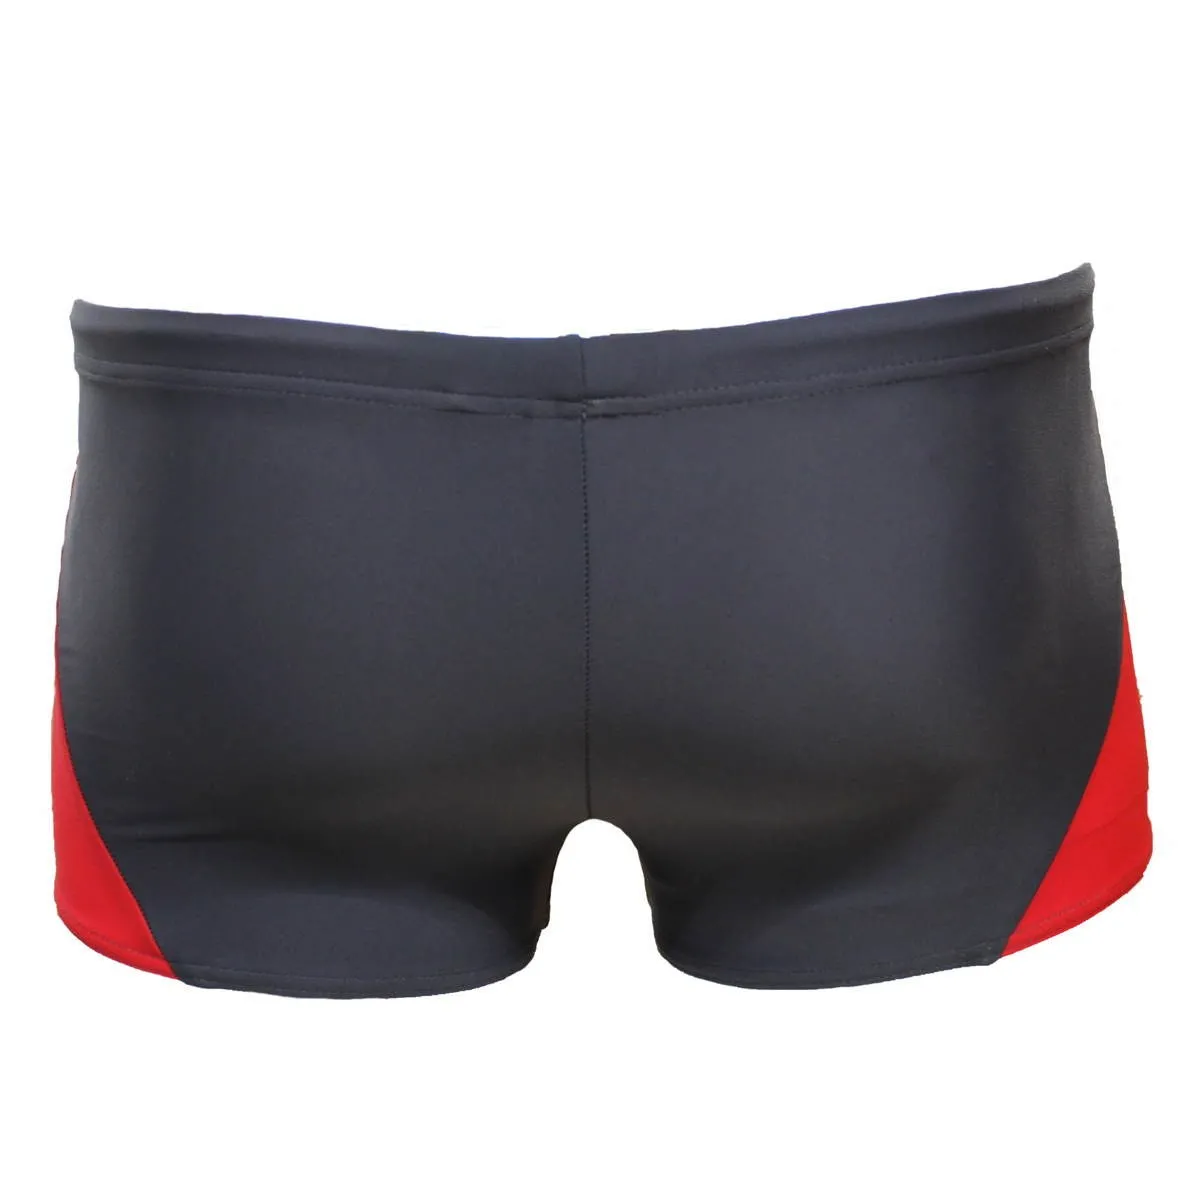 Swimming trunks - Bruno II swimming trunks graphite/red